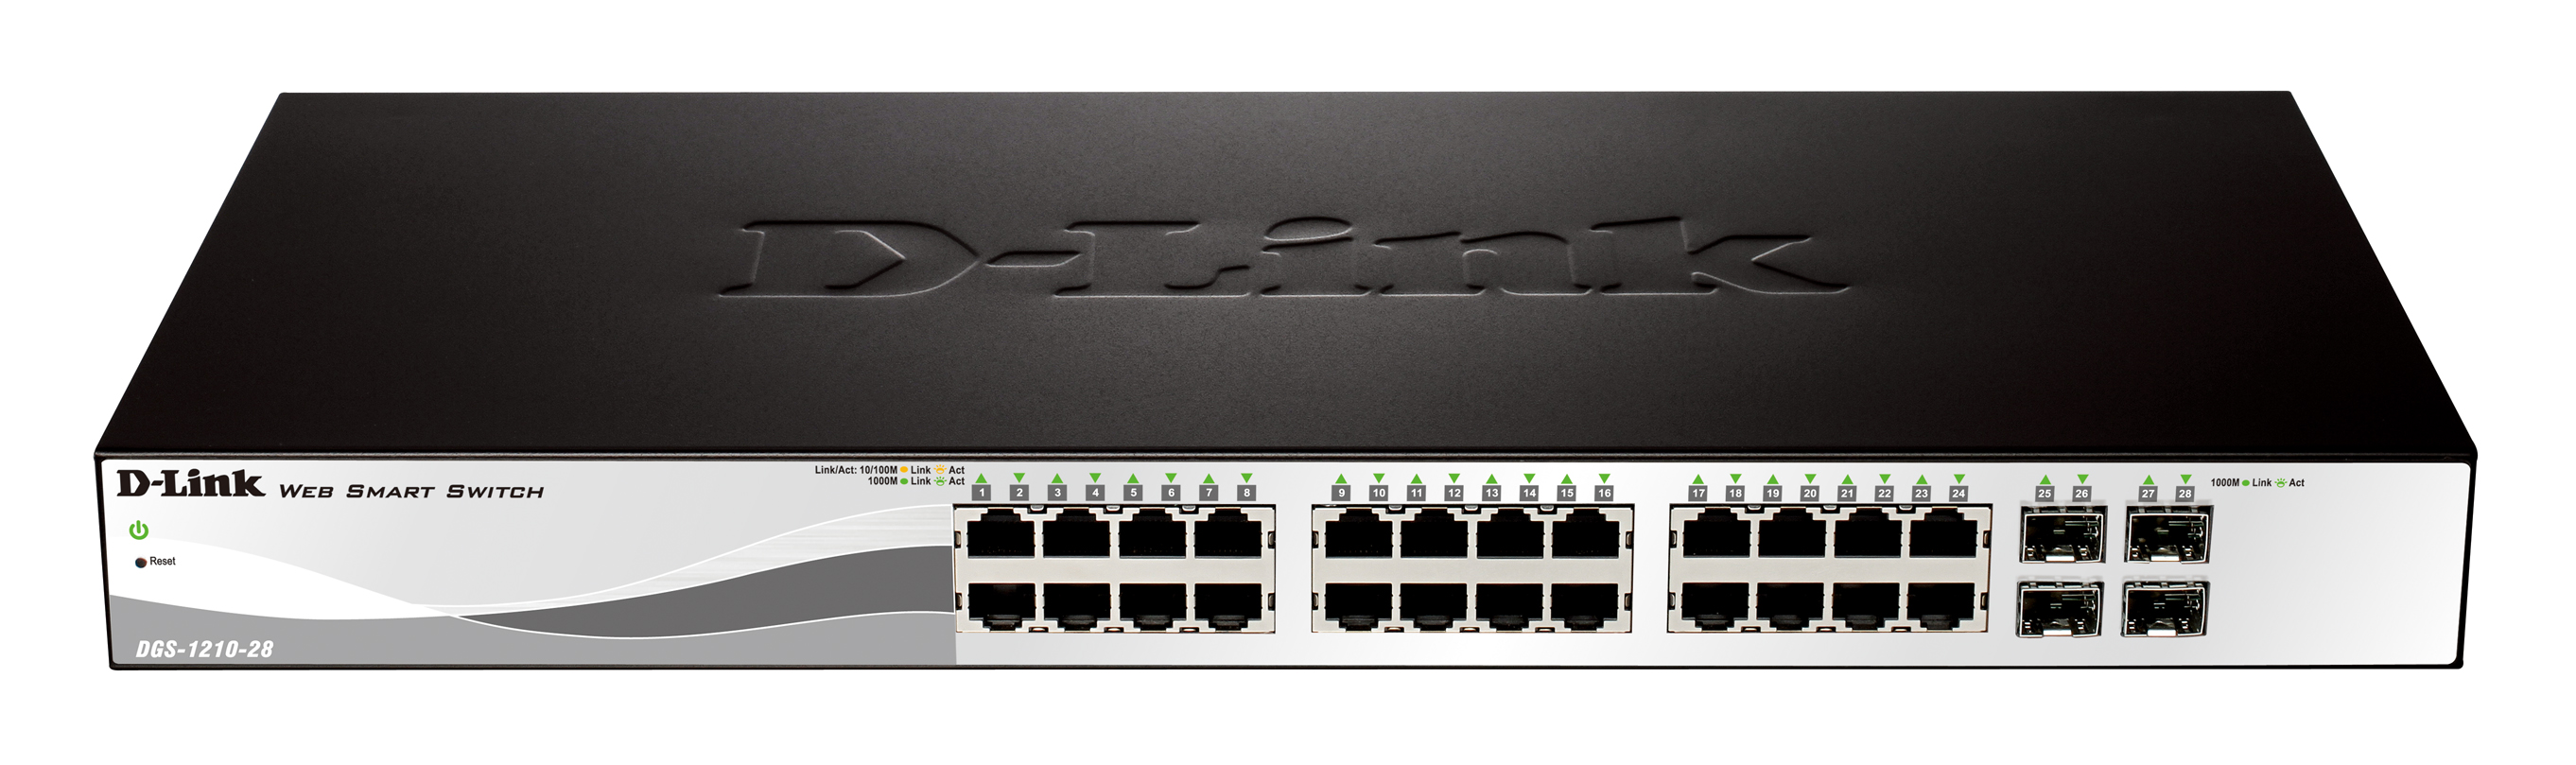 D-Link DXS-3350SR 48-Port 10/100/1000 Ethernet Switch with 4x SFP Ports 